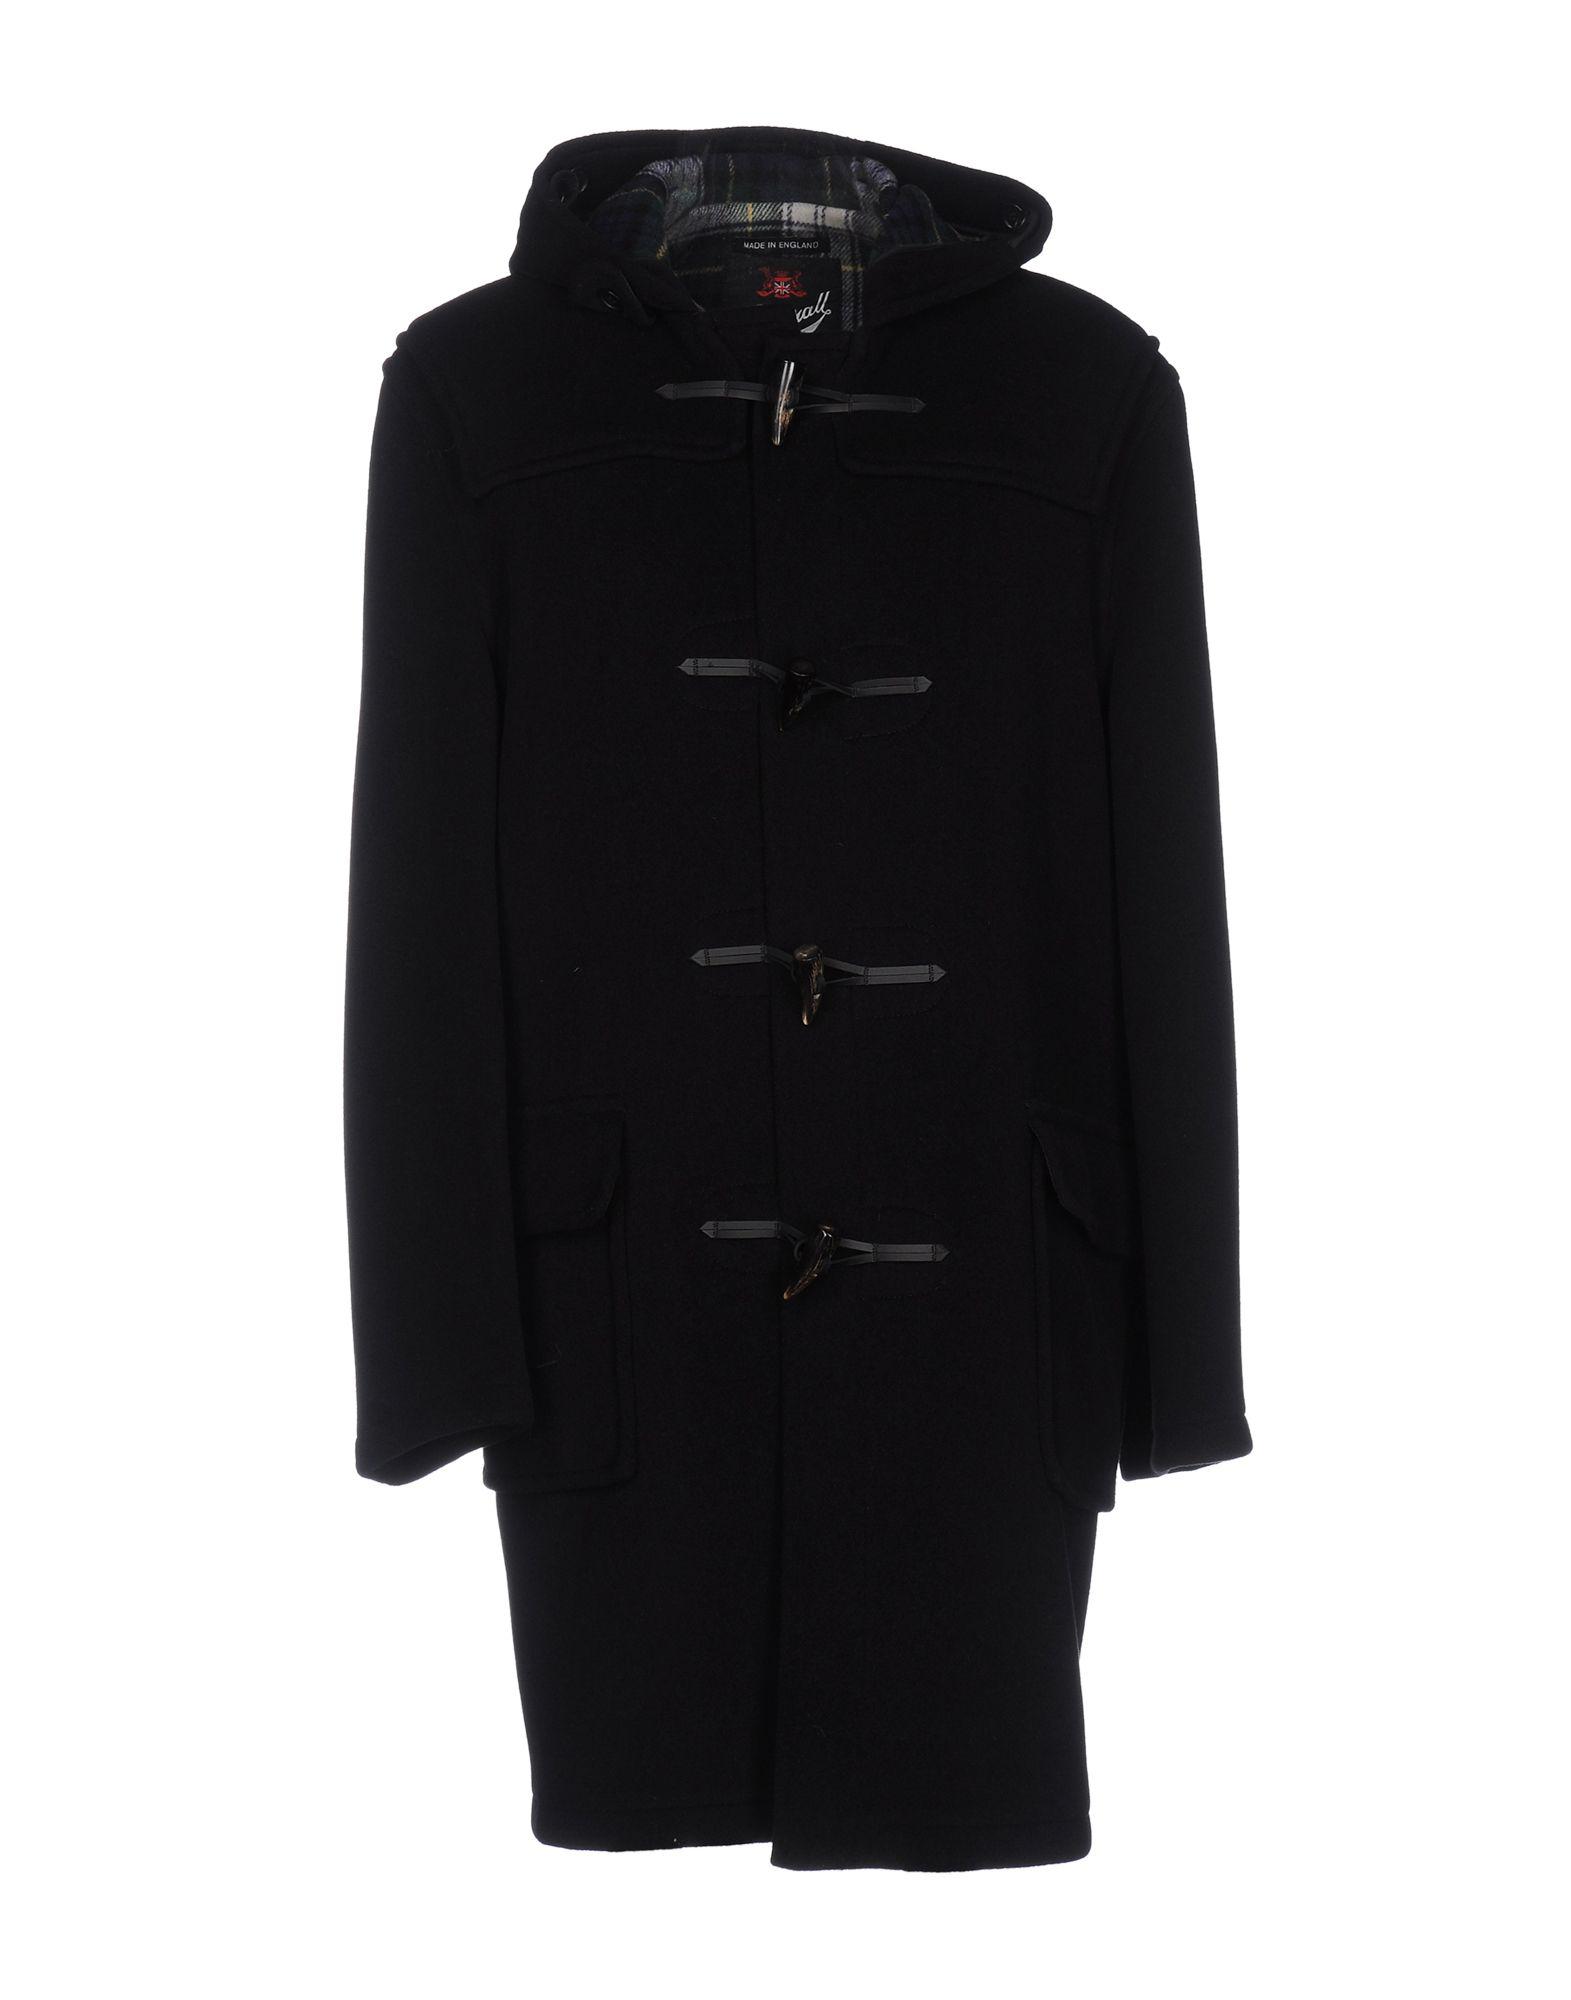 Lyst - Gloverall Coat in Black for Men